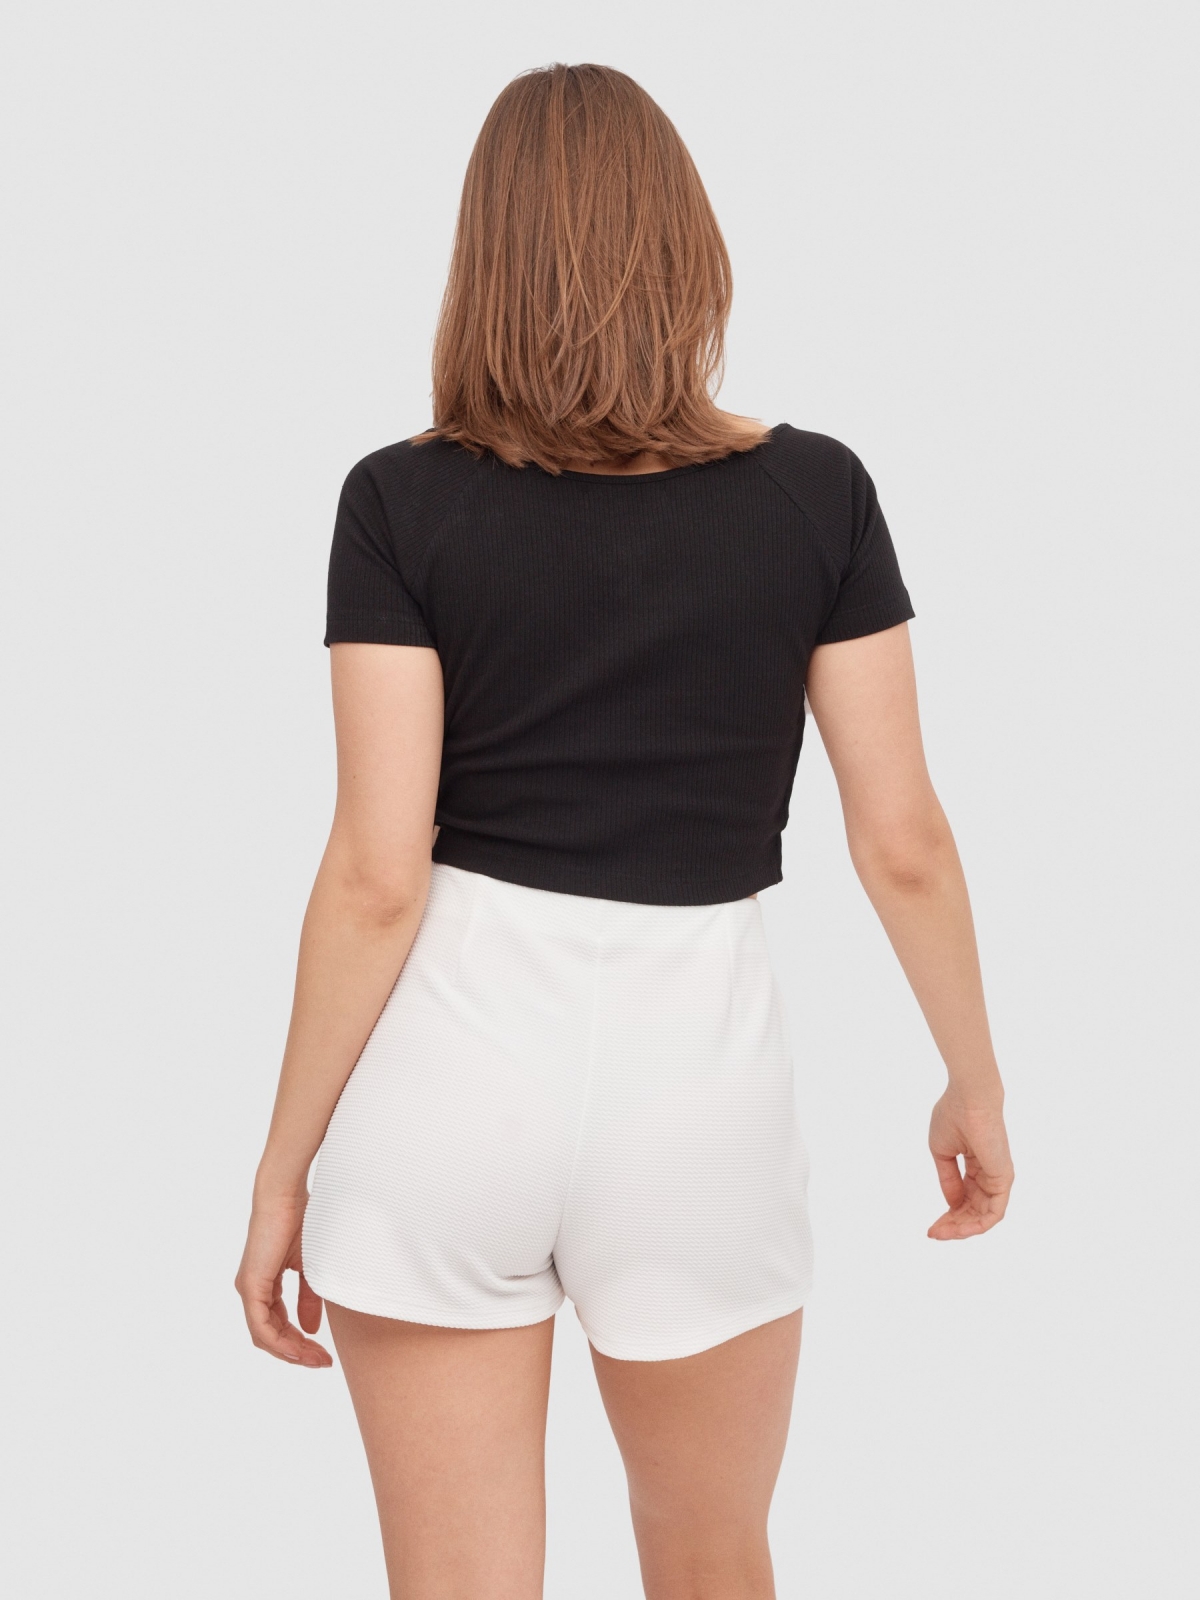 Falda pantalón mini blanco vista media trasera